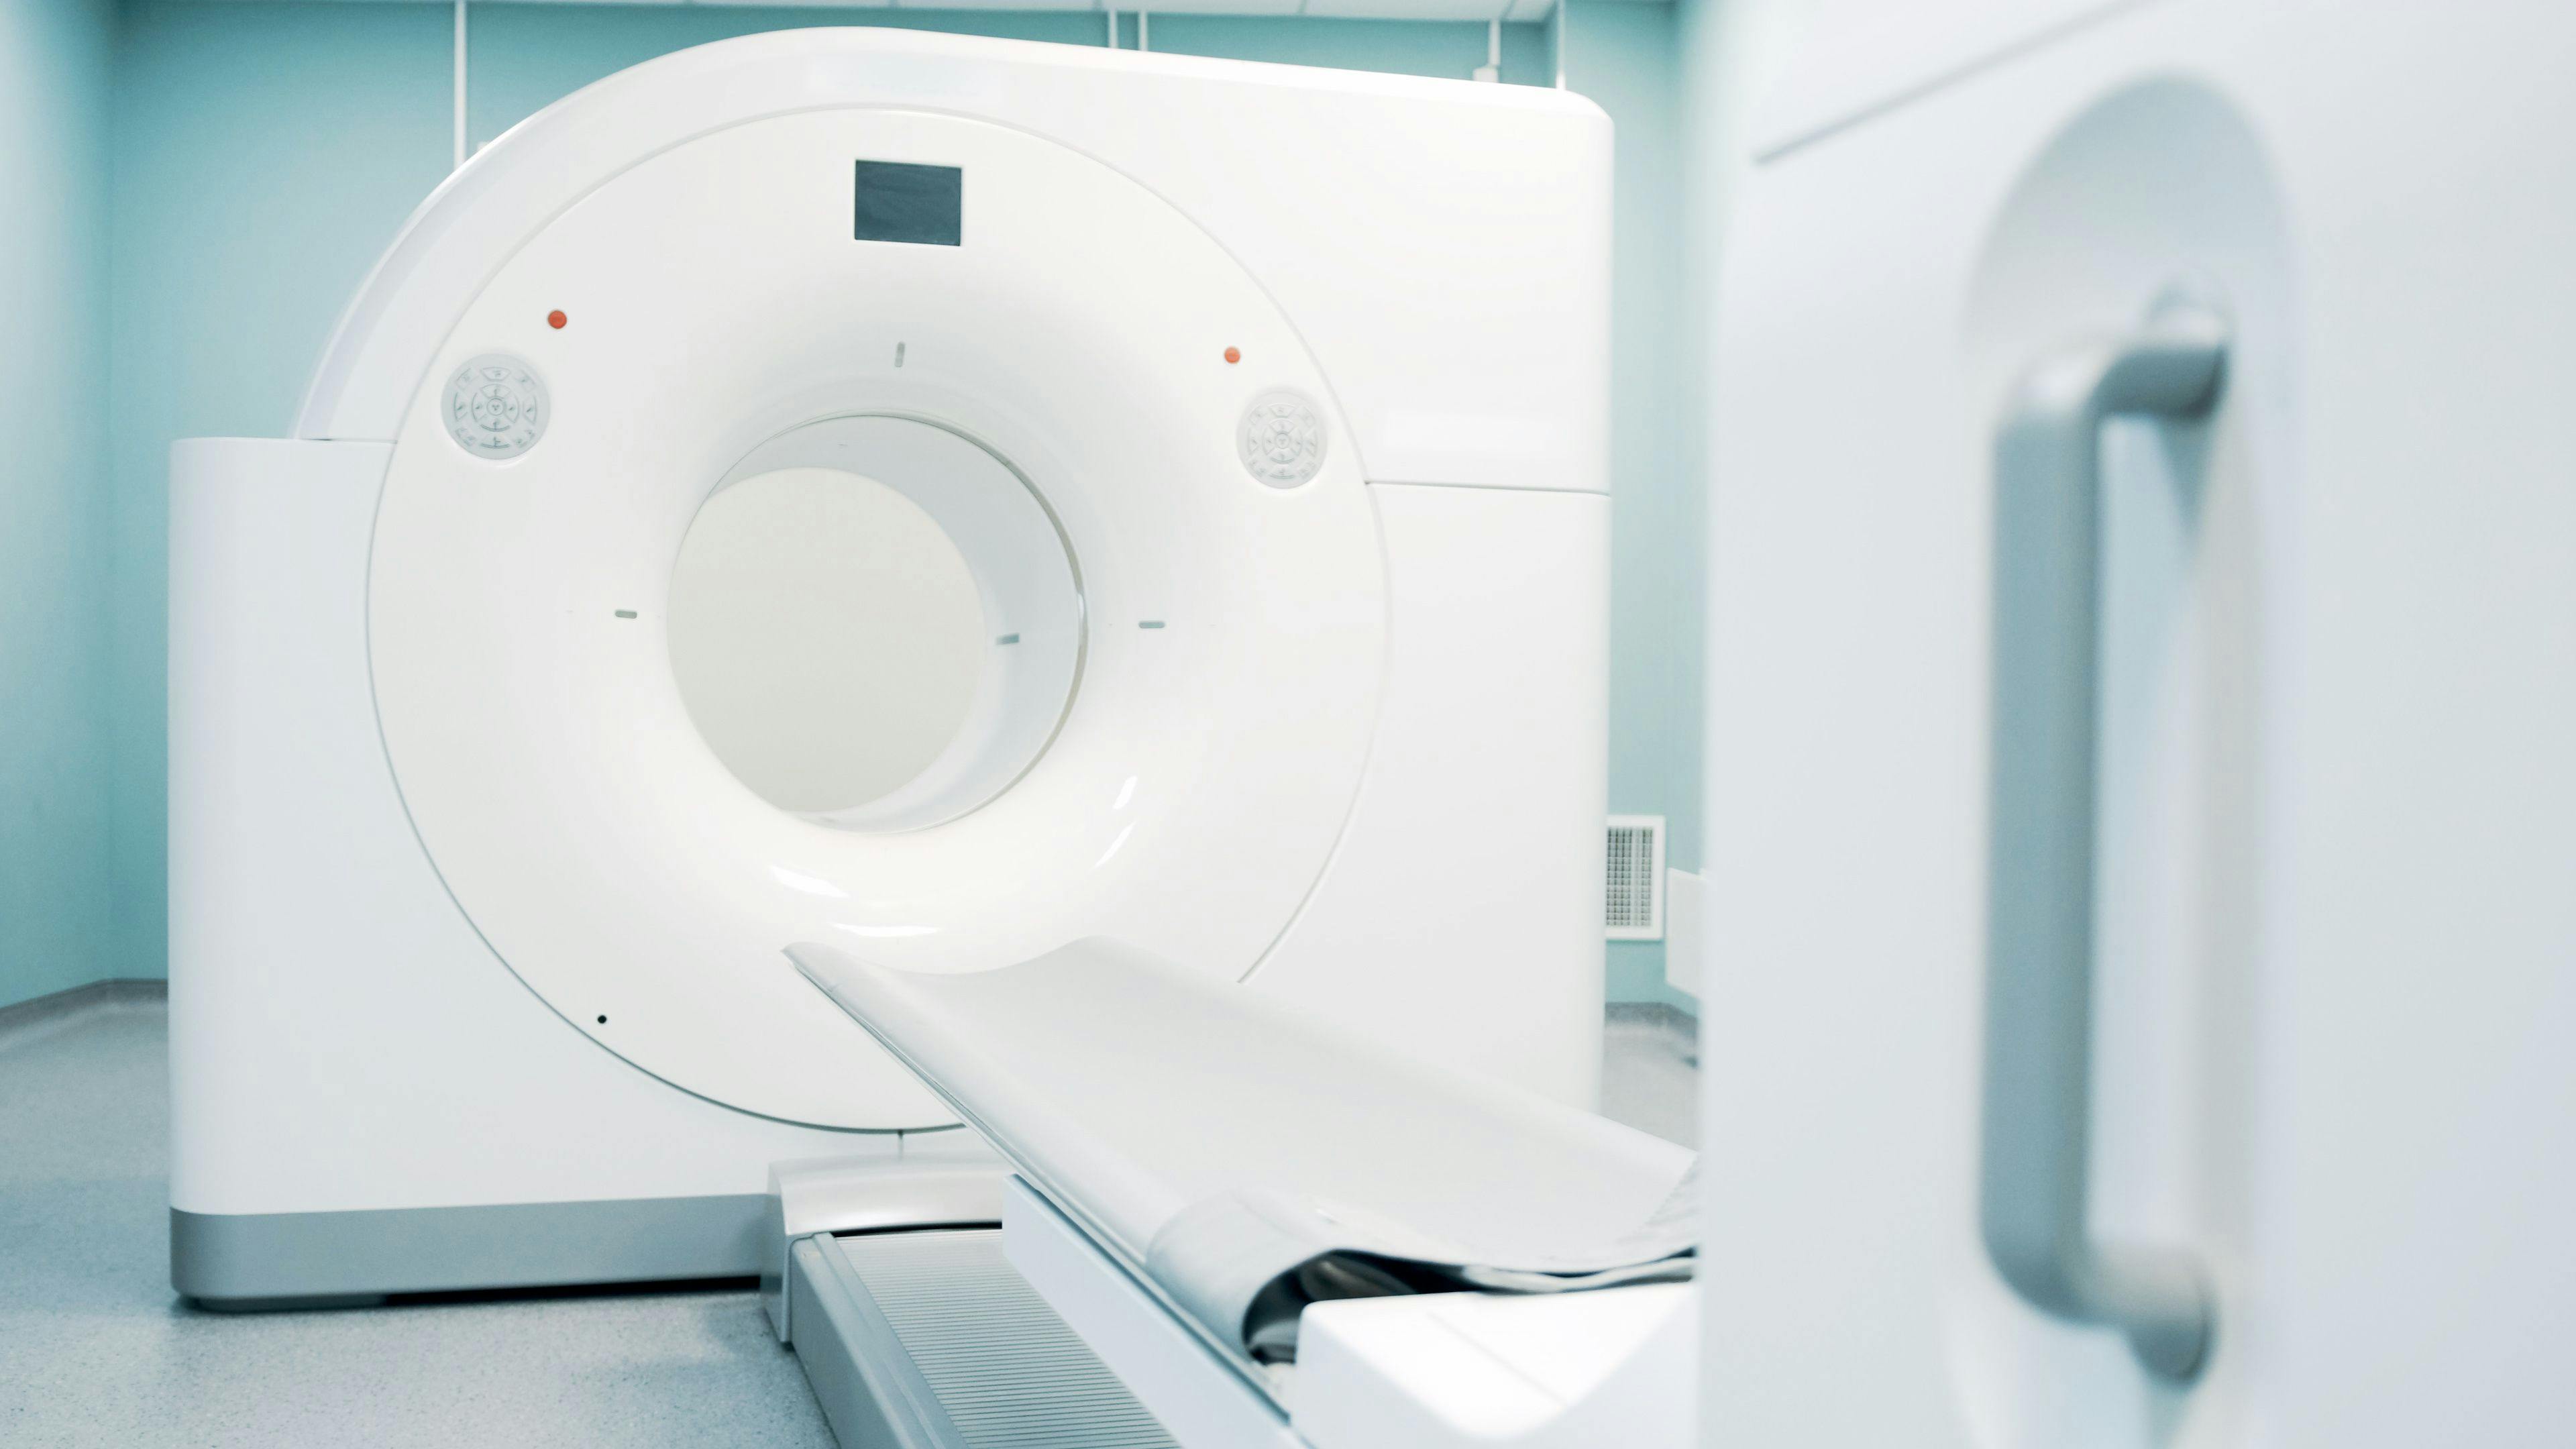 MRI Machine | image credit: Alexey - stock.adobe.com